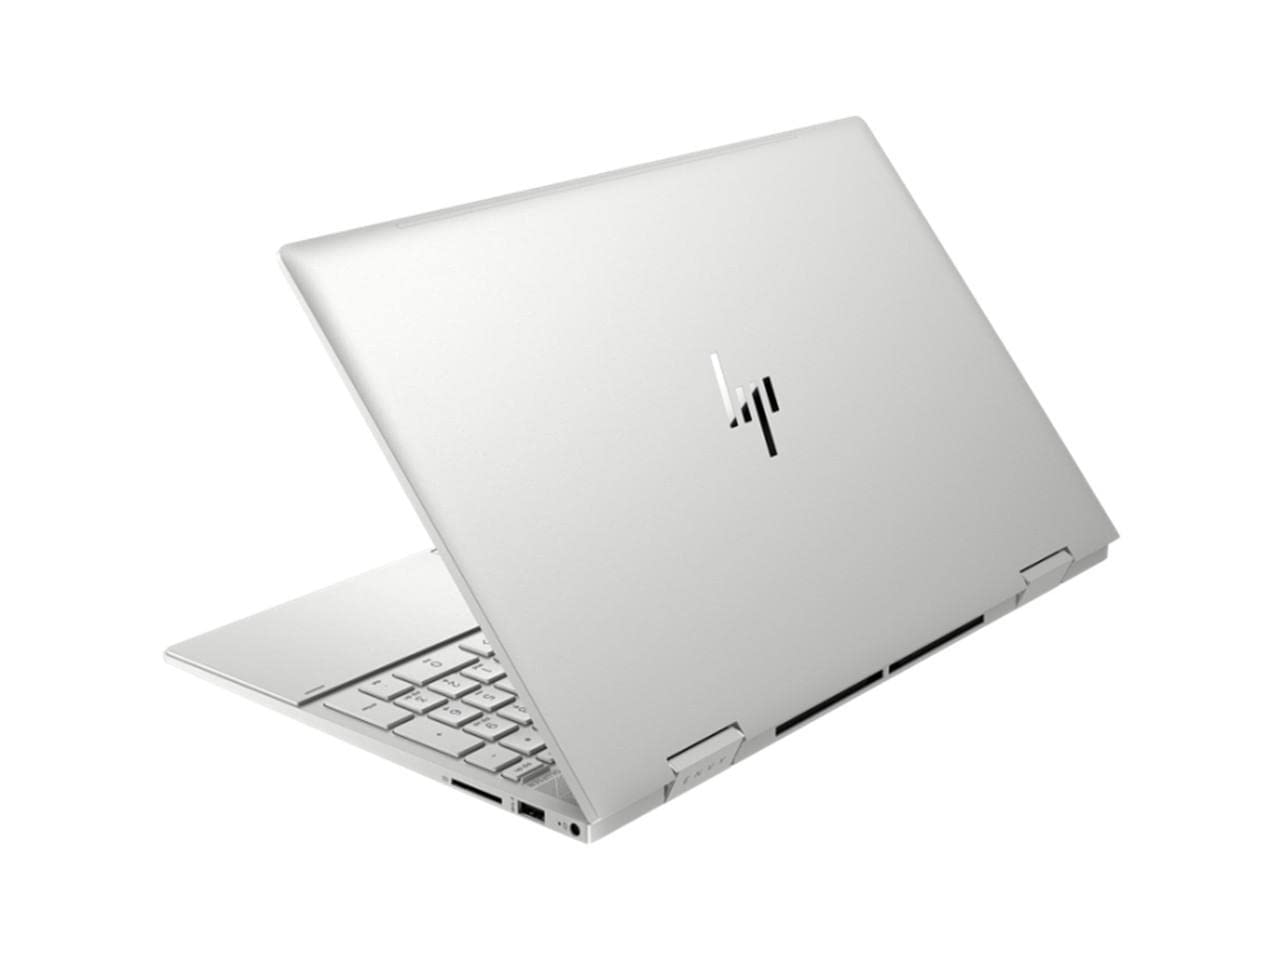 HP Envy X360 2-in-1 15.6" FHD IPS Touch-Screen Laptop | 11th Generation Intel Core i5-1135G7 | 8GB DDR4 RAM | 512GB SSD | Backlit Keyboard | Fingerprint | Windows 11 Home | with Stylus Pen Bundle